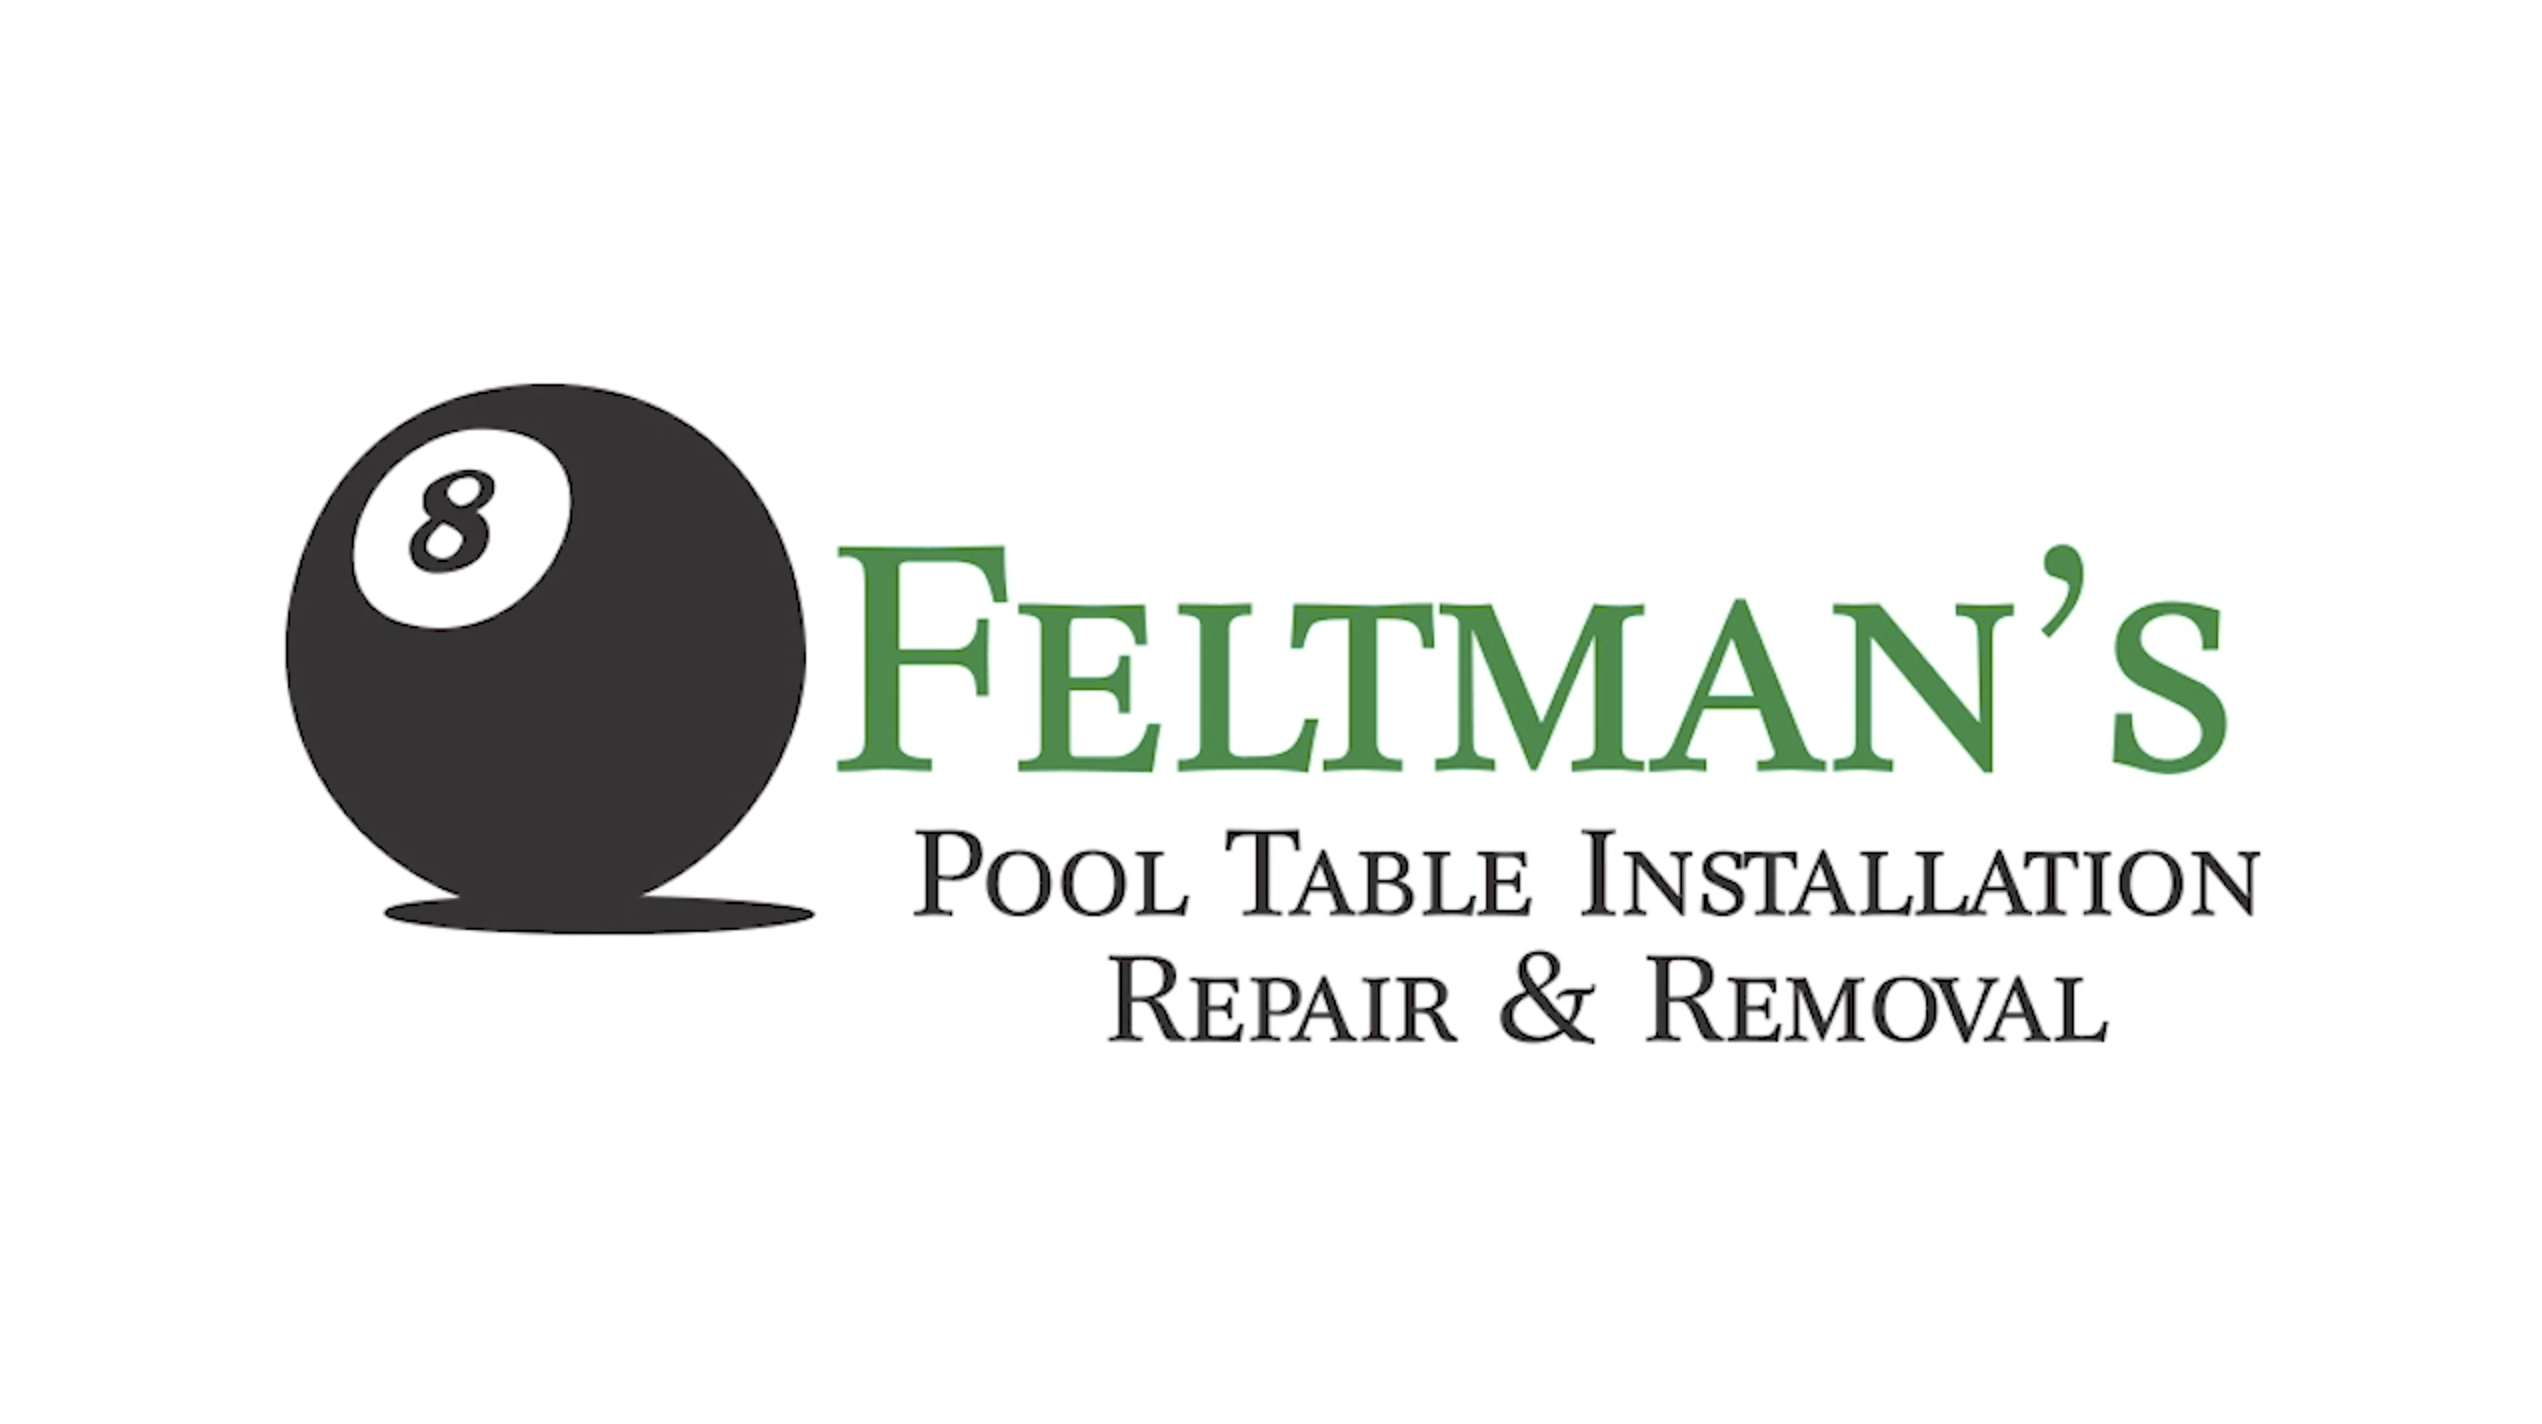 Feltman's Pool Table Installation, Repair & Removal - Rebel Radio Commercial